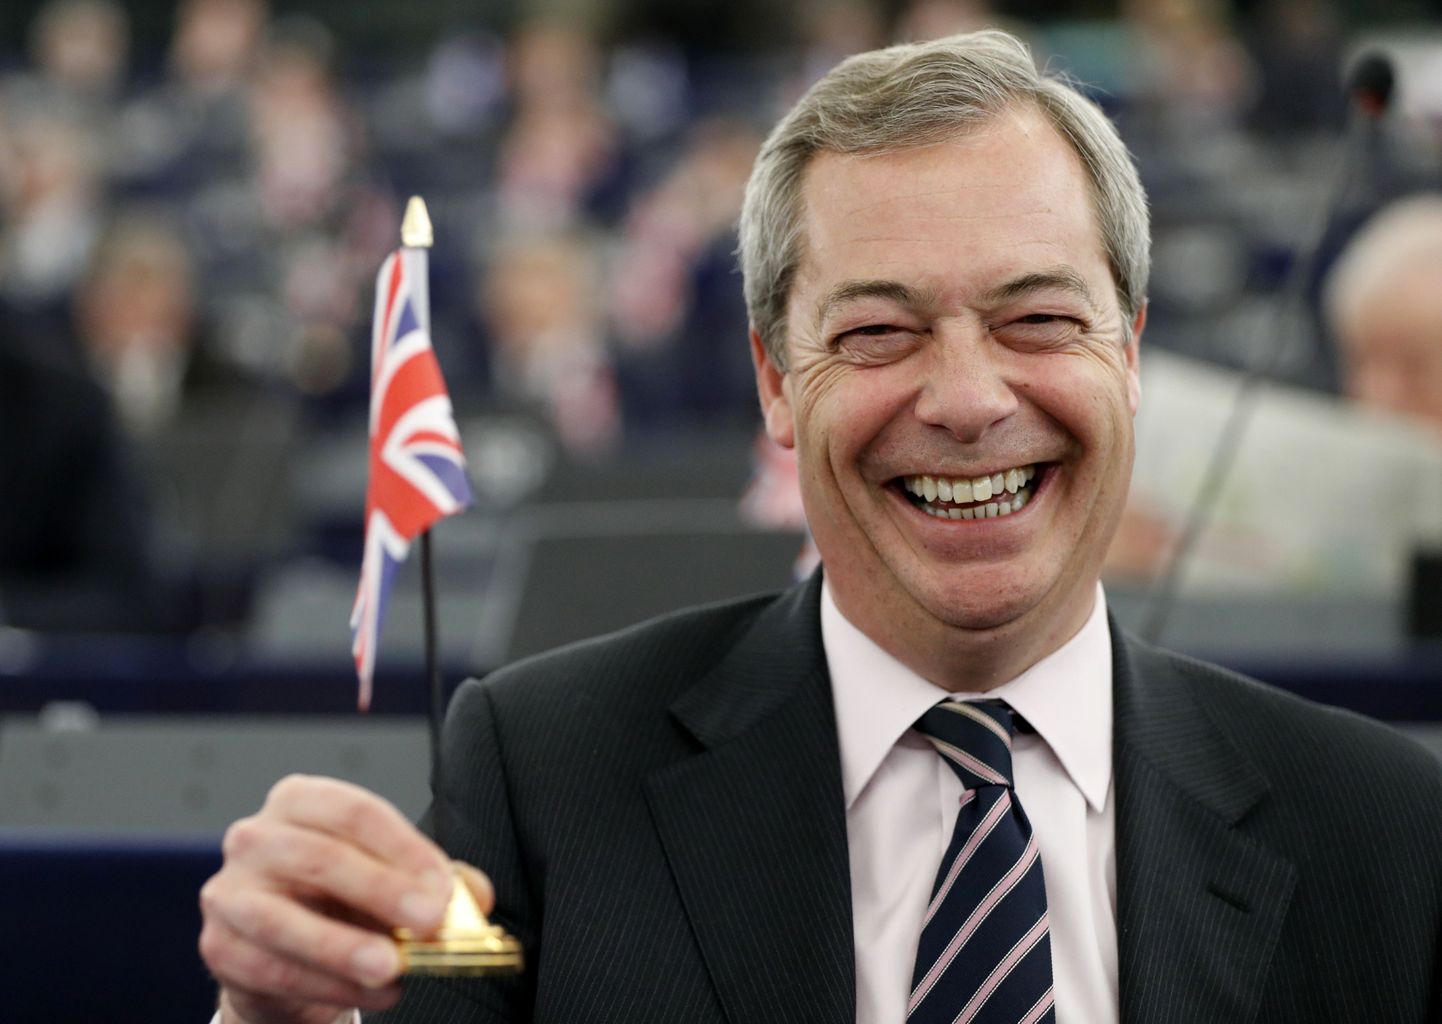 Naeratav Briti poliitik Nigel farage